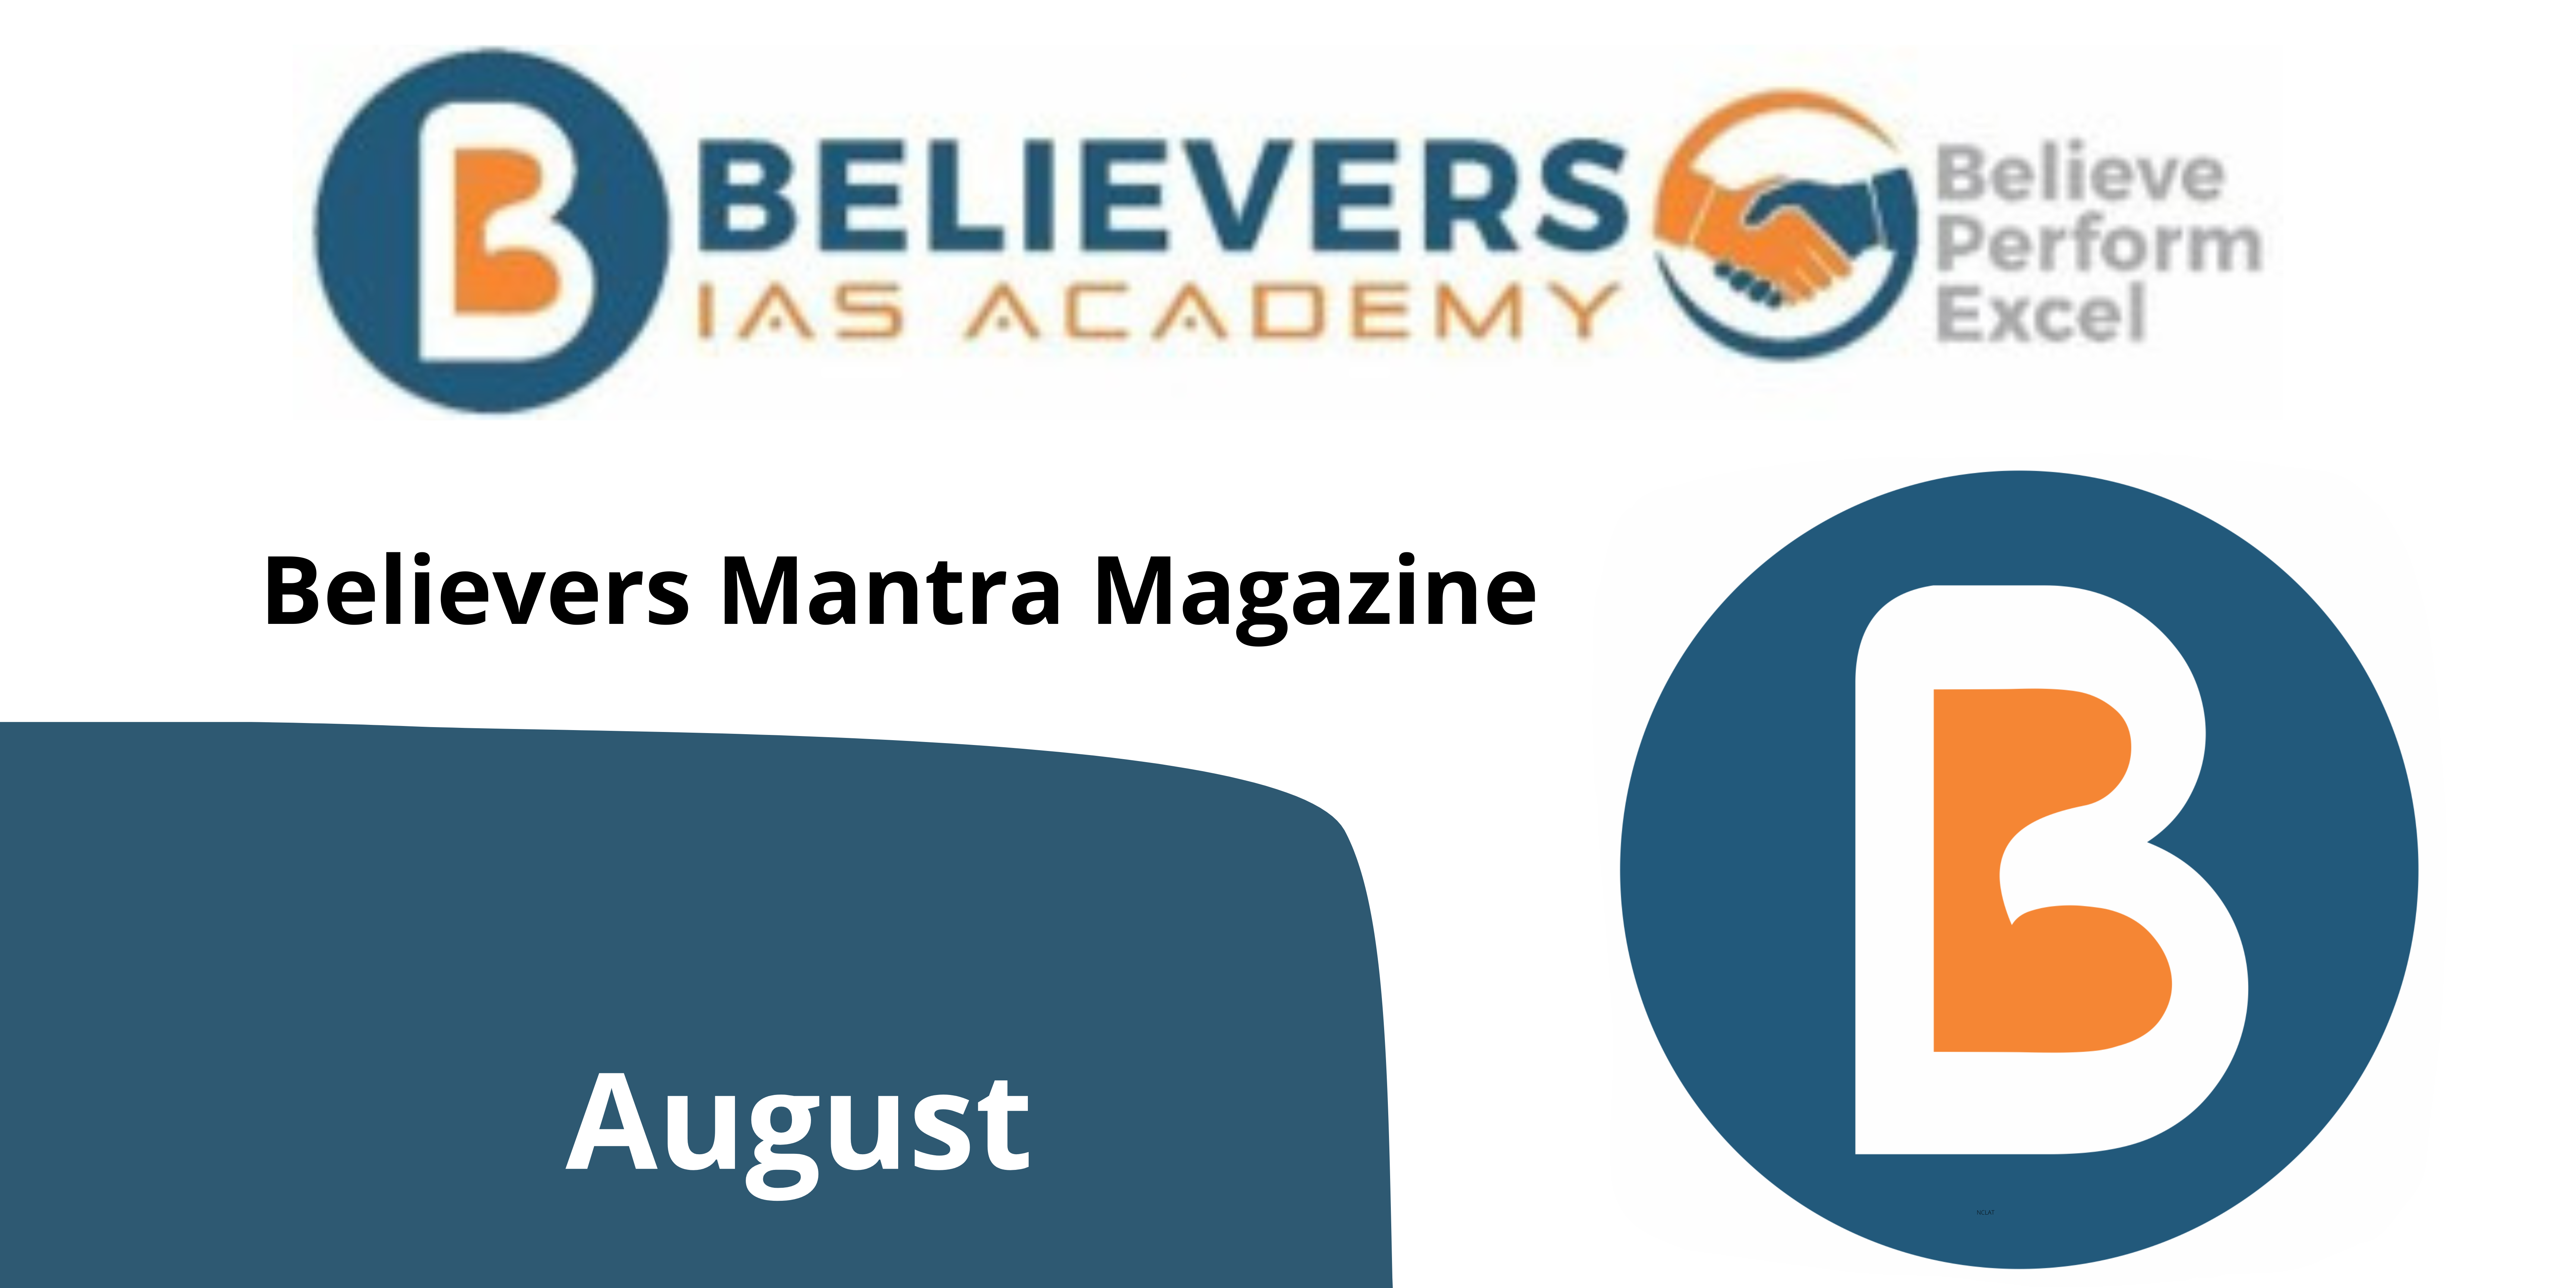 Believers Mantra Magazine - August